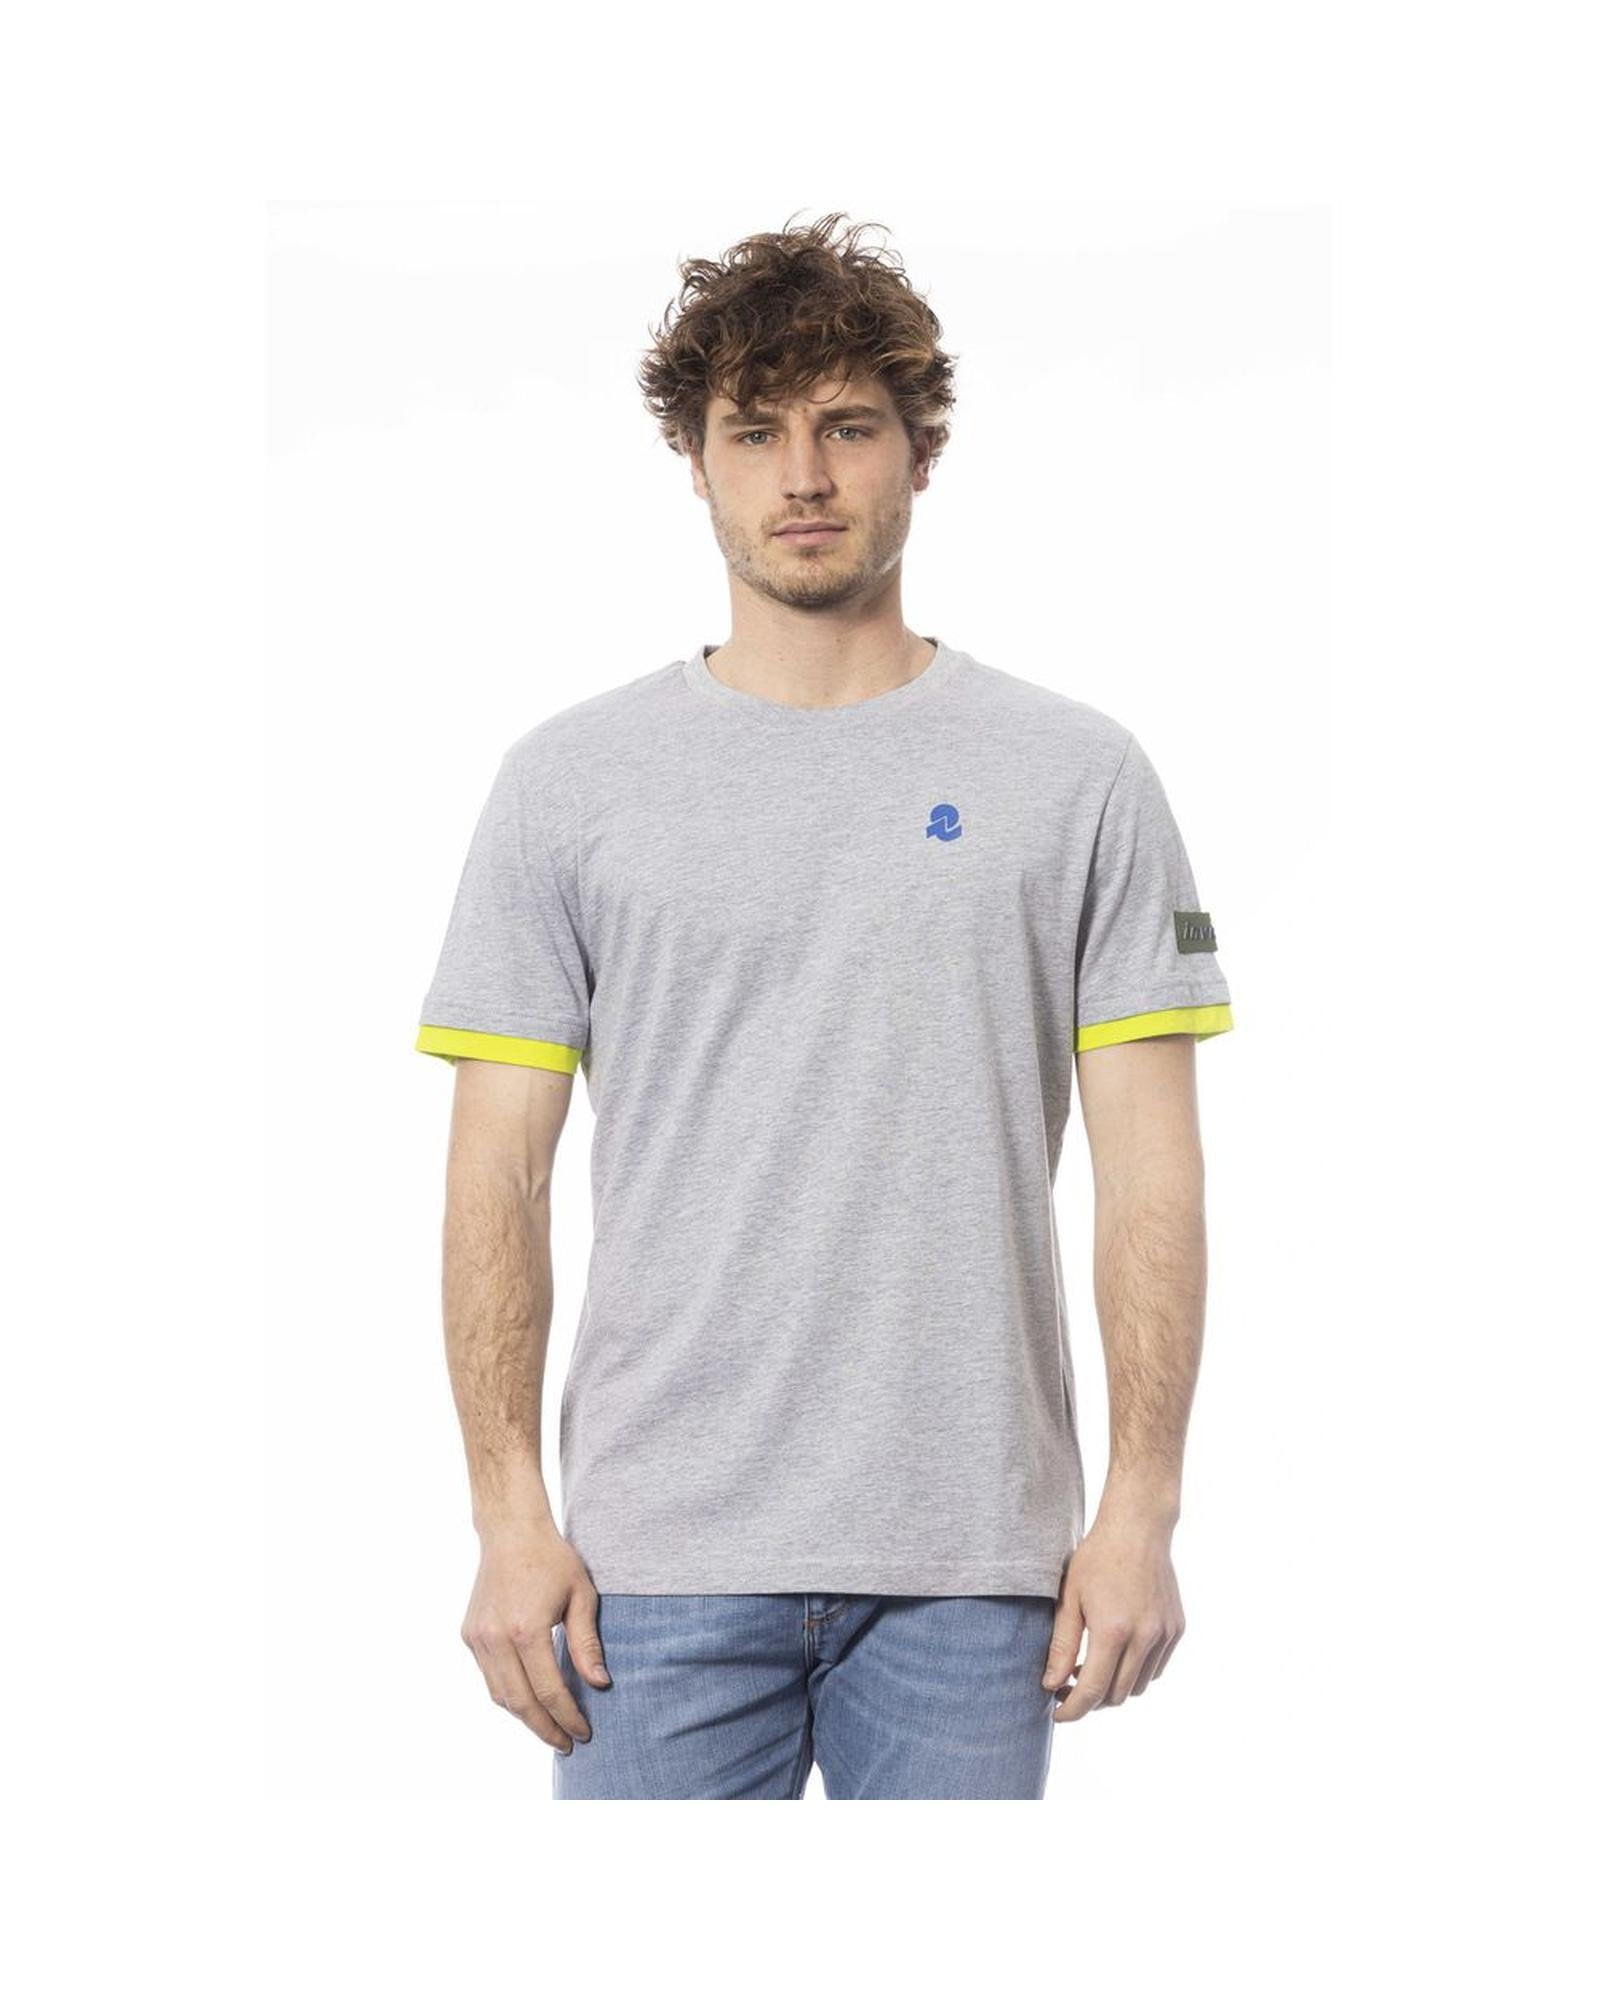 Men's Gray Cotton T-Shirt - 2XL